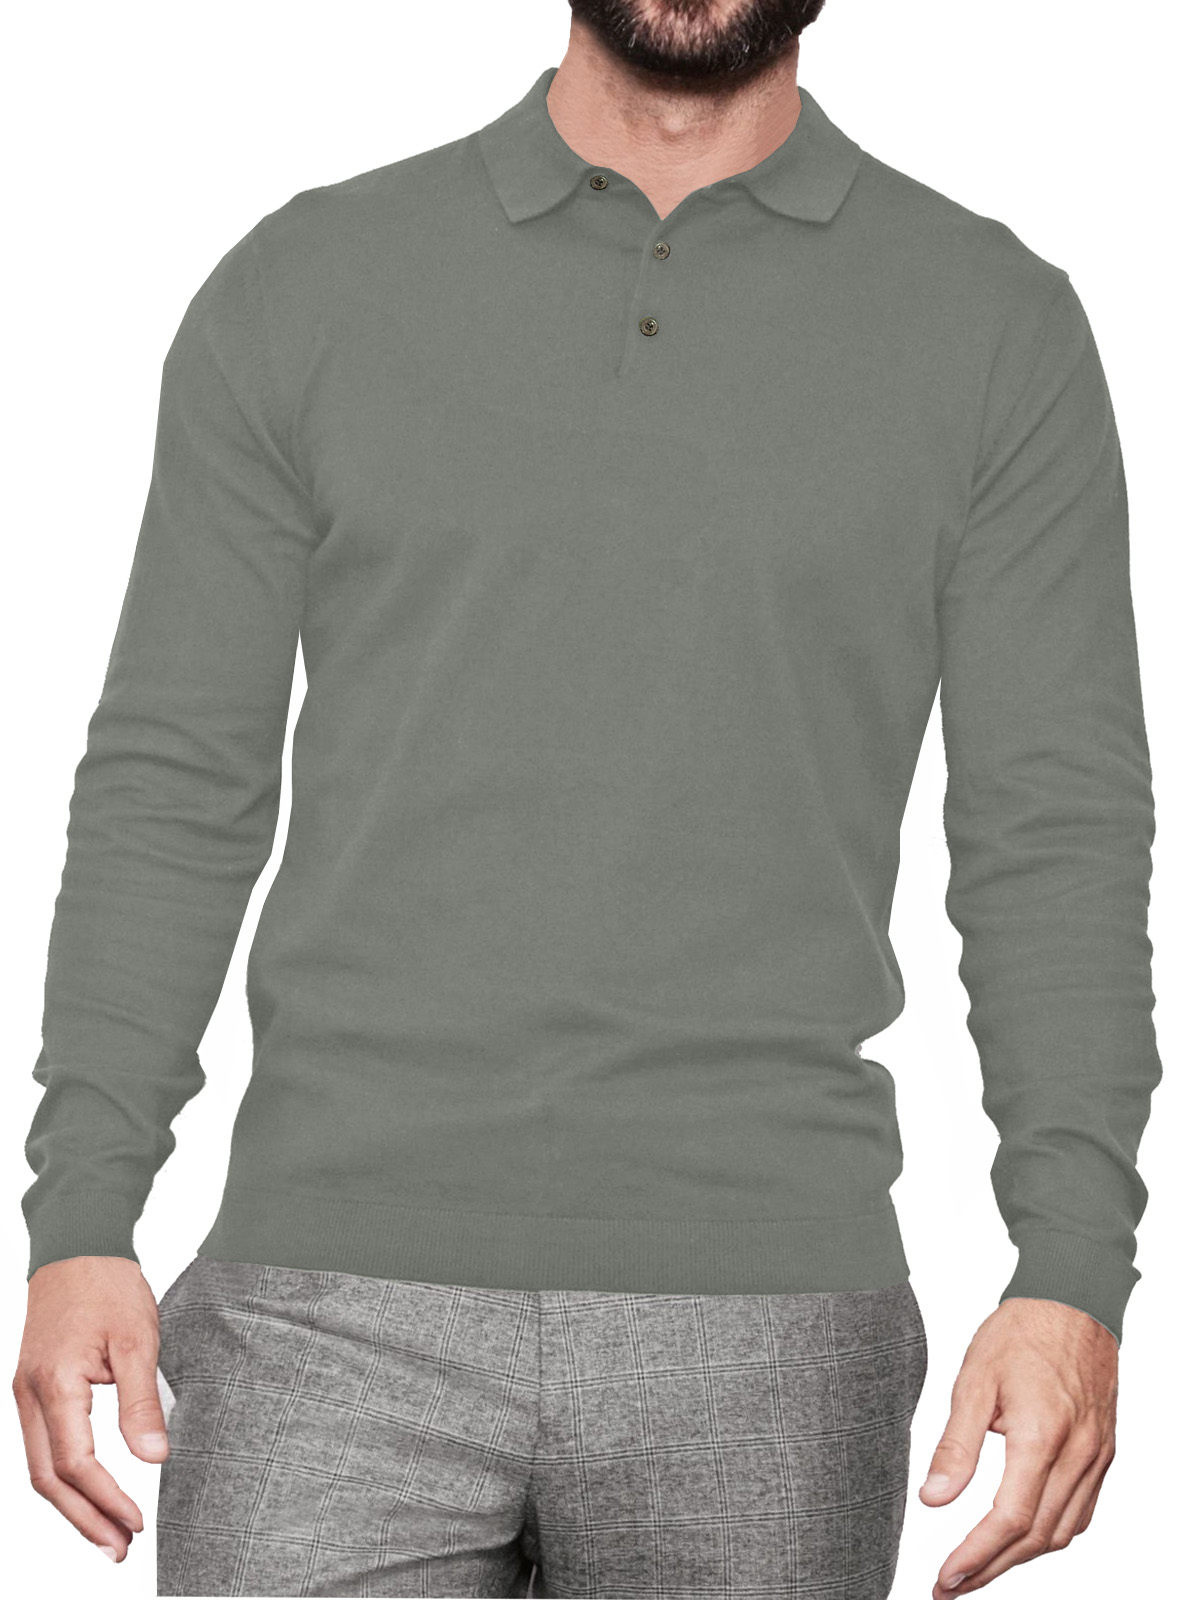 N3XT DUSTY-GREEN Mens Cotton Rich Long Sleeve Polo Shirt - Size Large